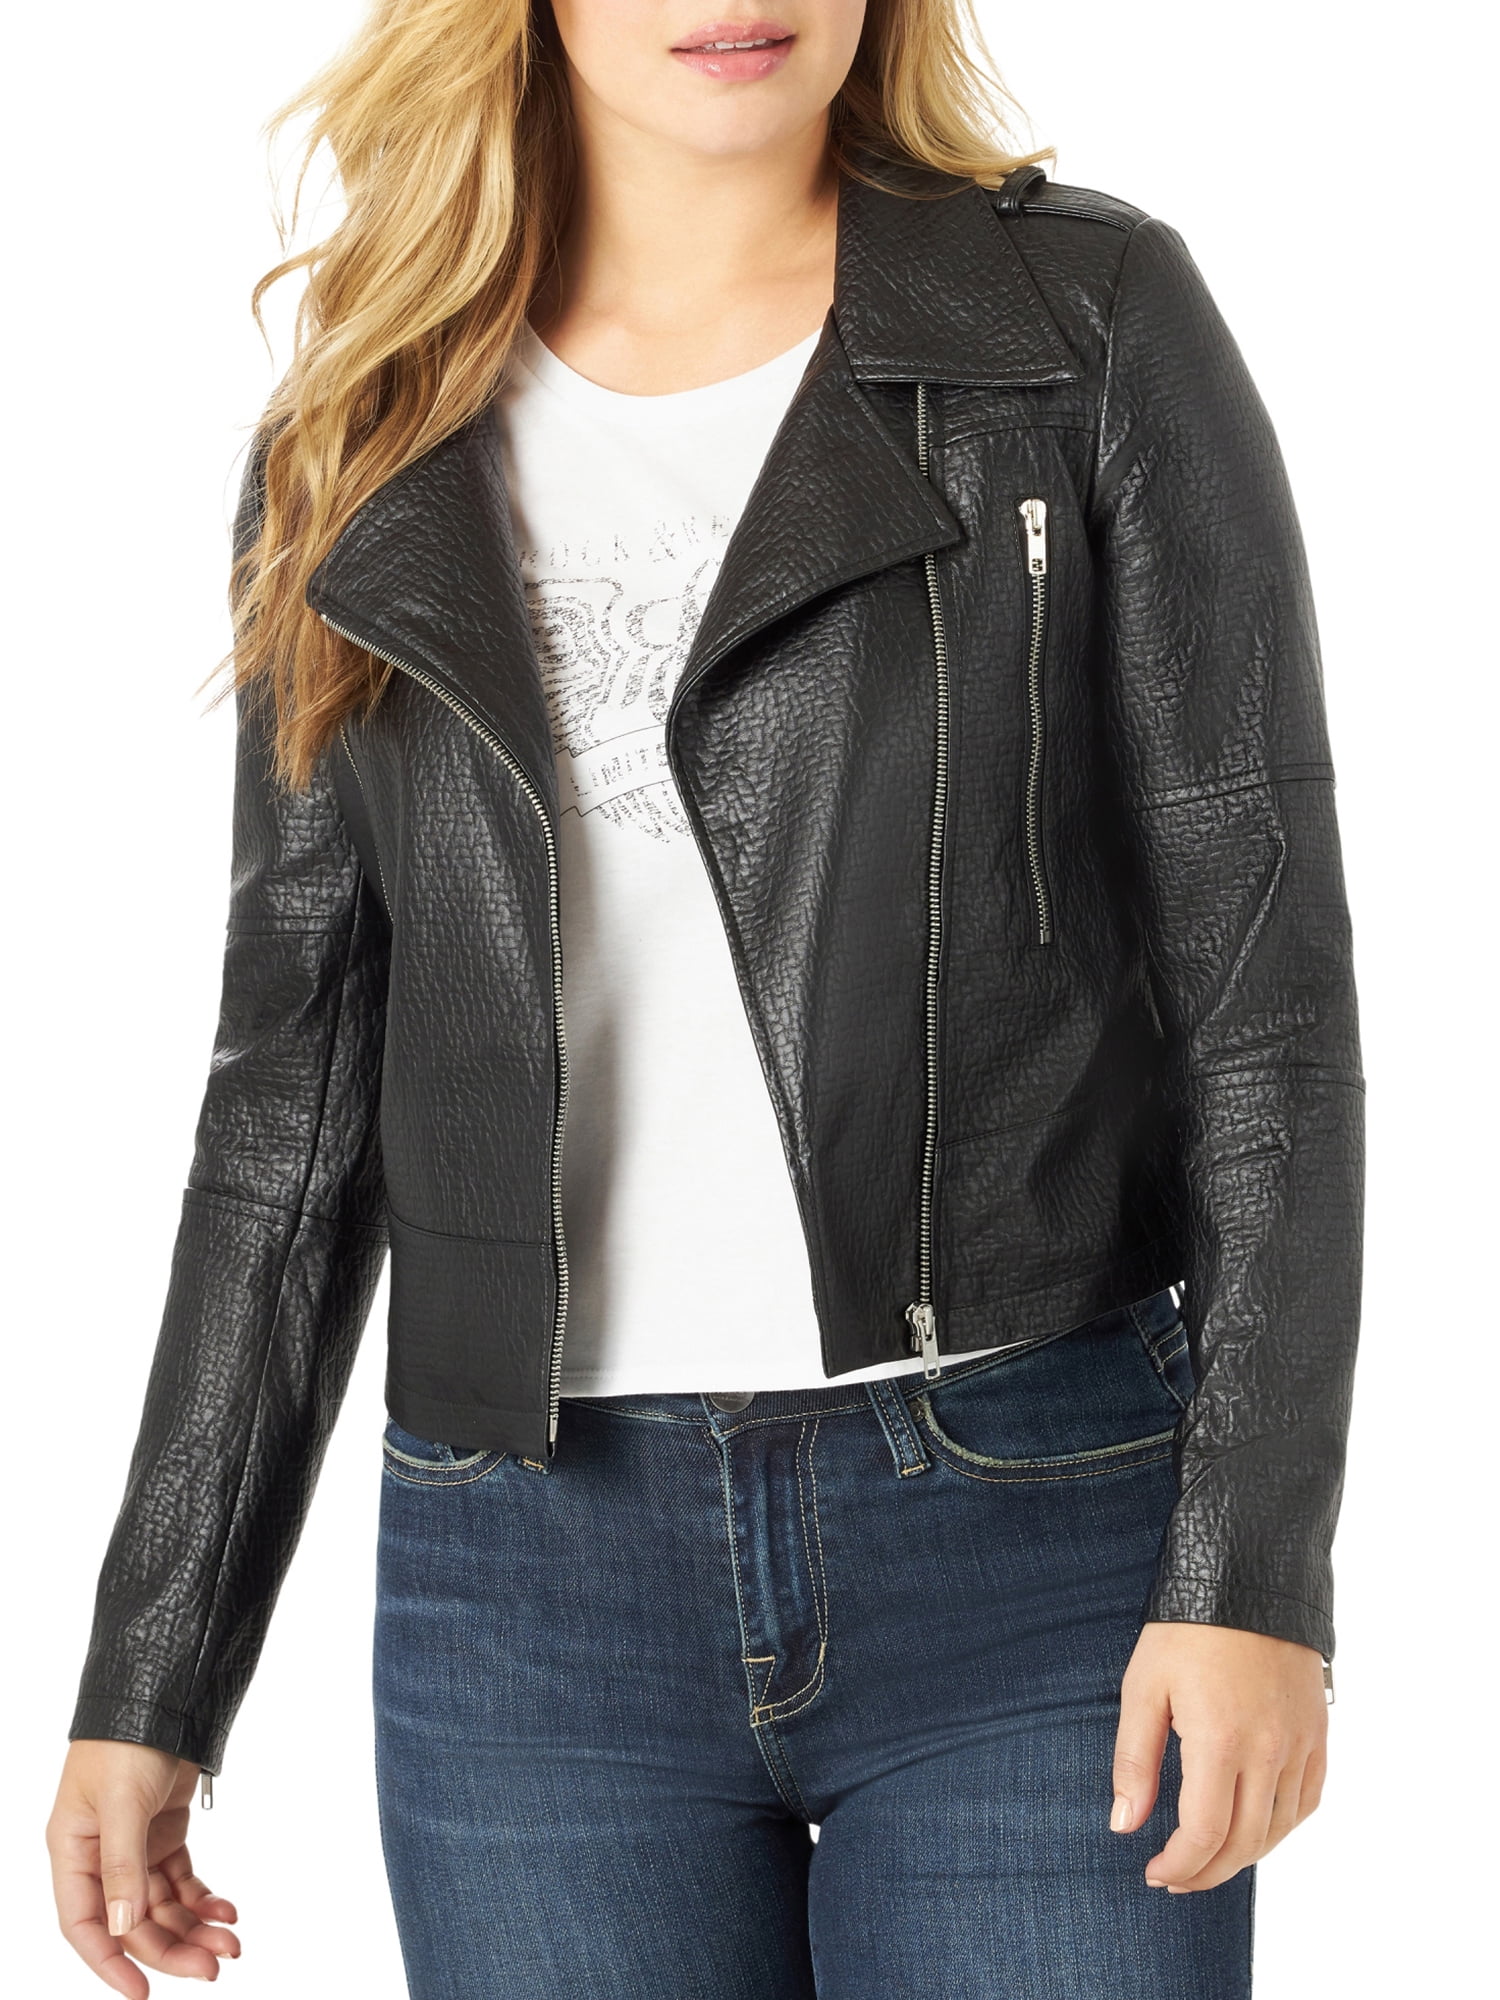 Rock & Republic Womens Classic Faux Leather Jacket - Walmart.com